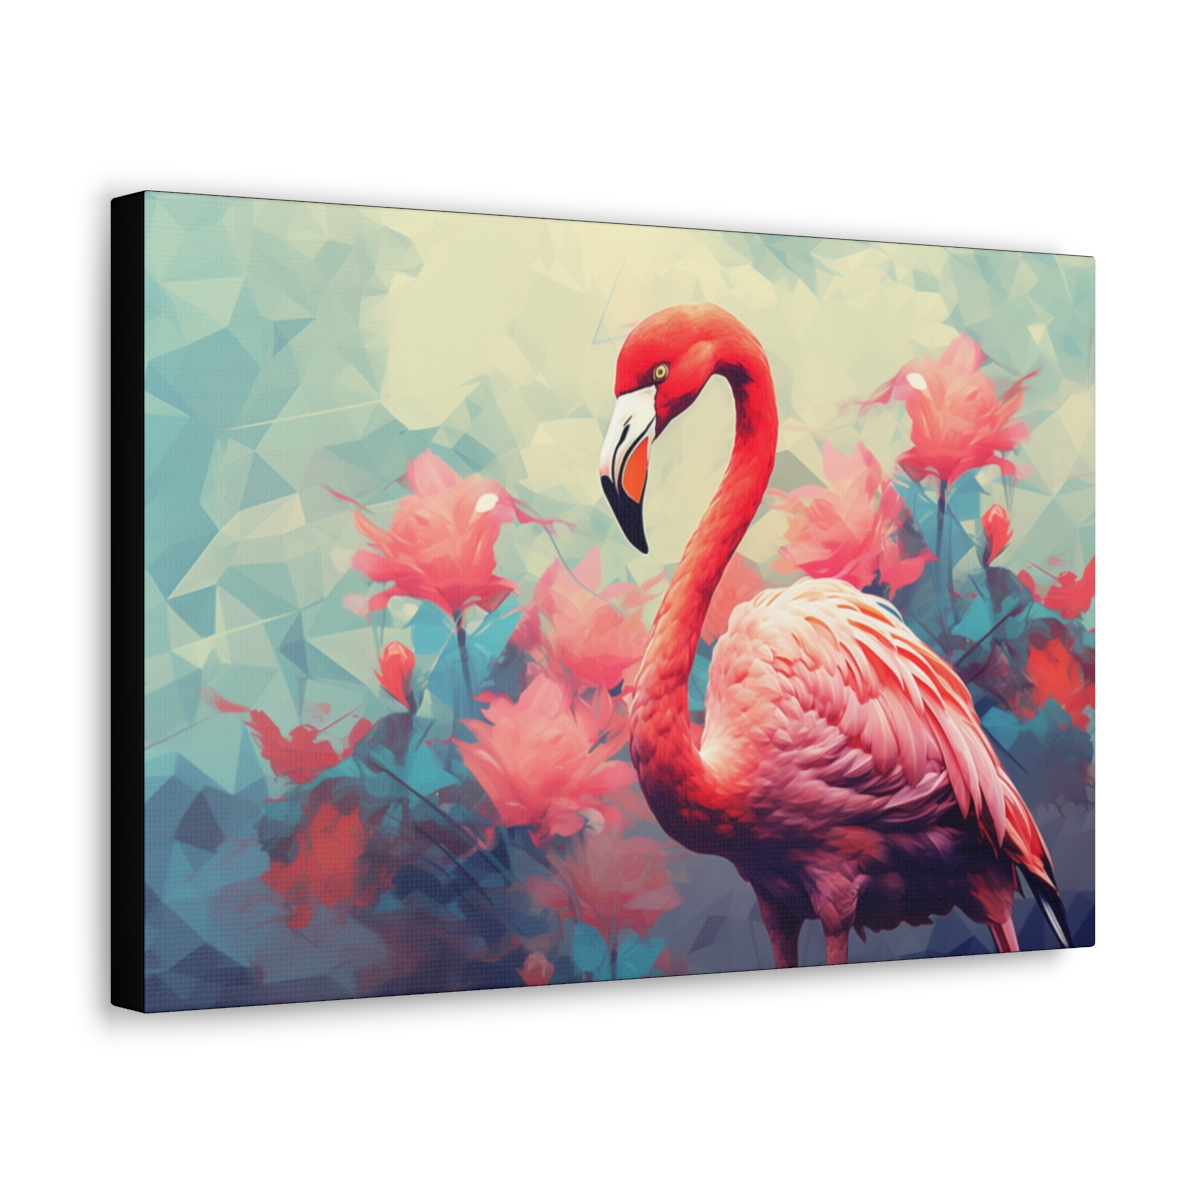 Simple Minimalist Flower Art: The Red Flamingo